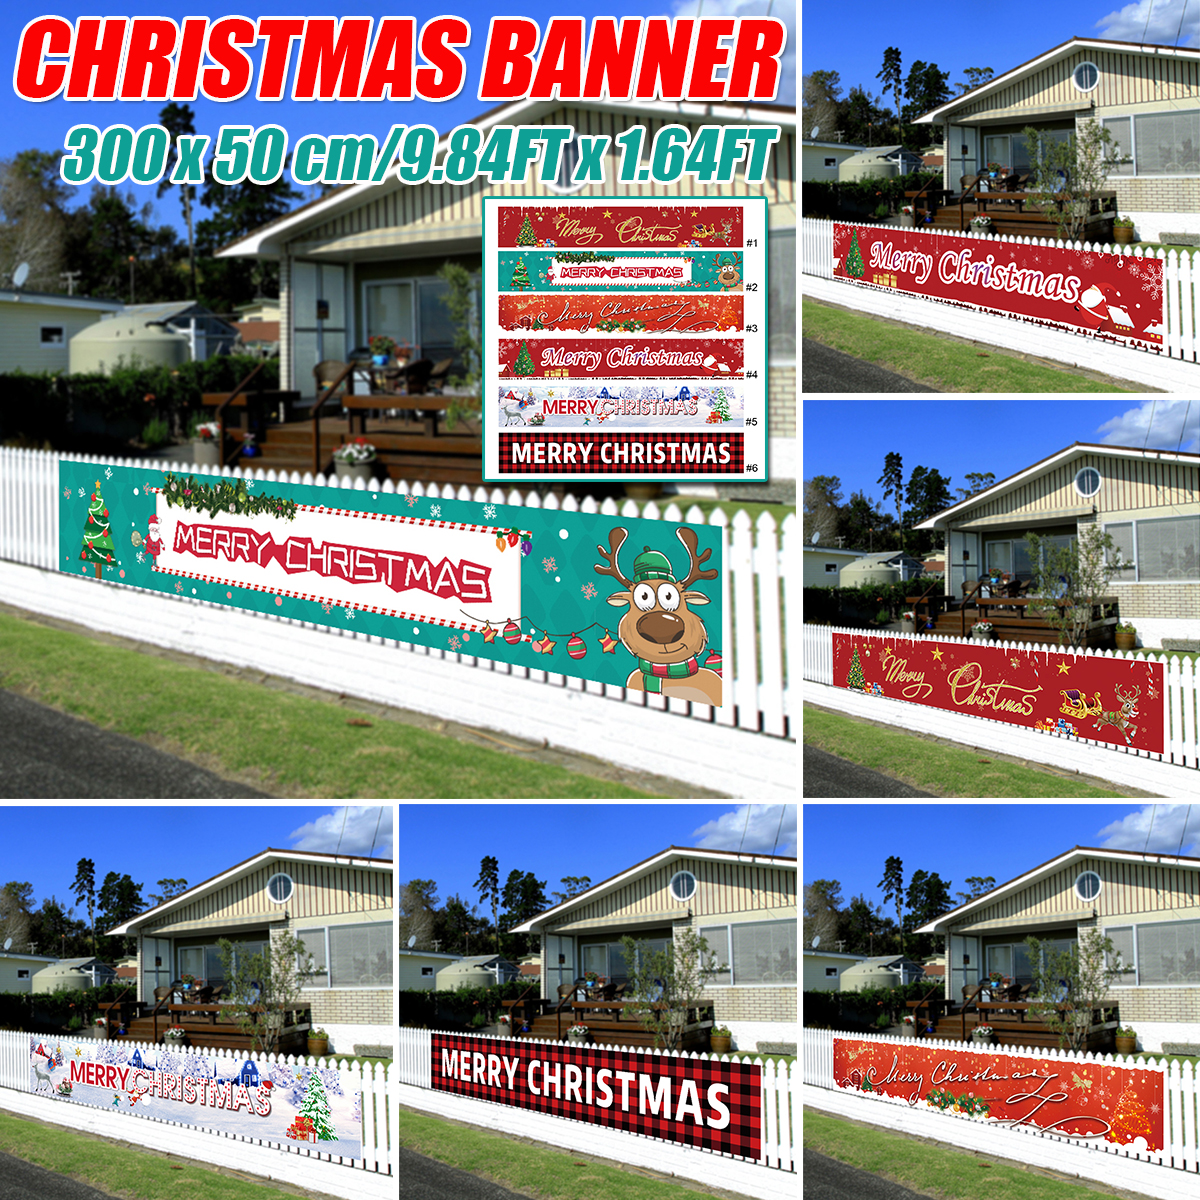 2020-Cristmas-Outdoor-Banner-Merry-Christmas-Curtain-Decor-for-Home-Cristmas-Outdoor-Decor-Xmas-Navi-1831913-1